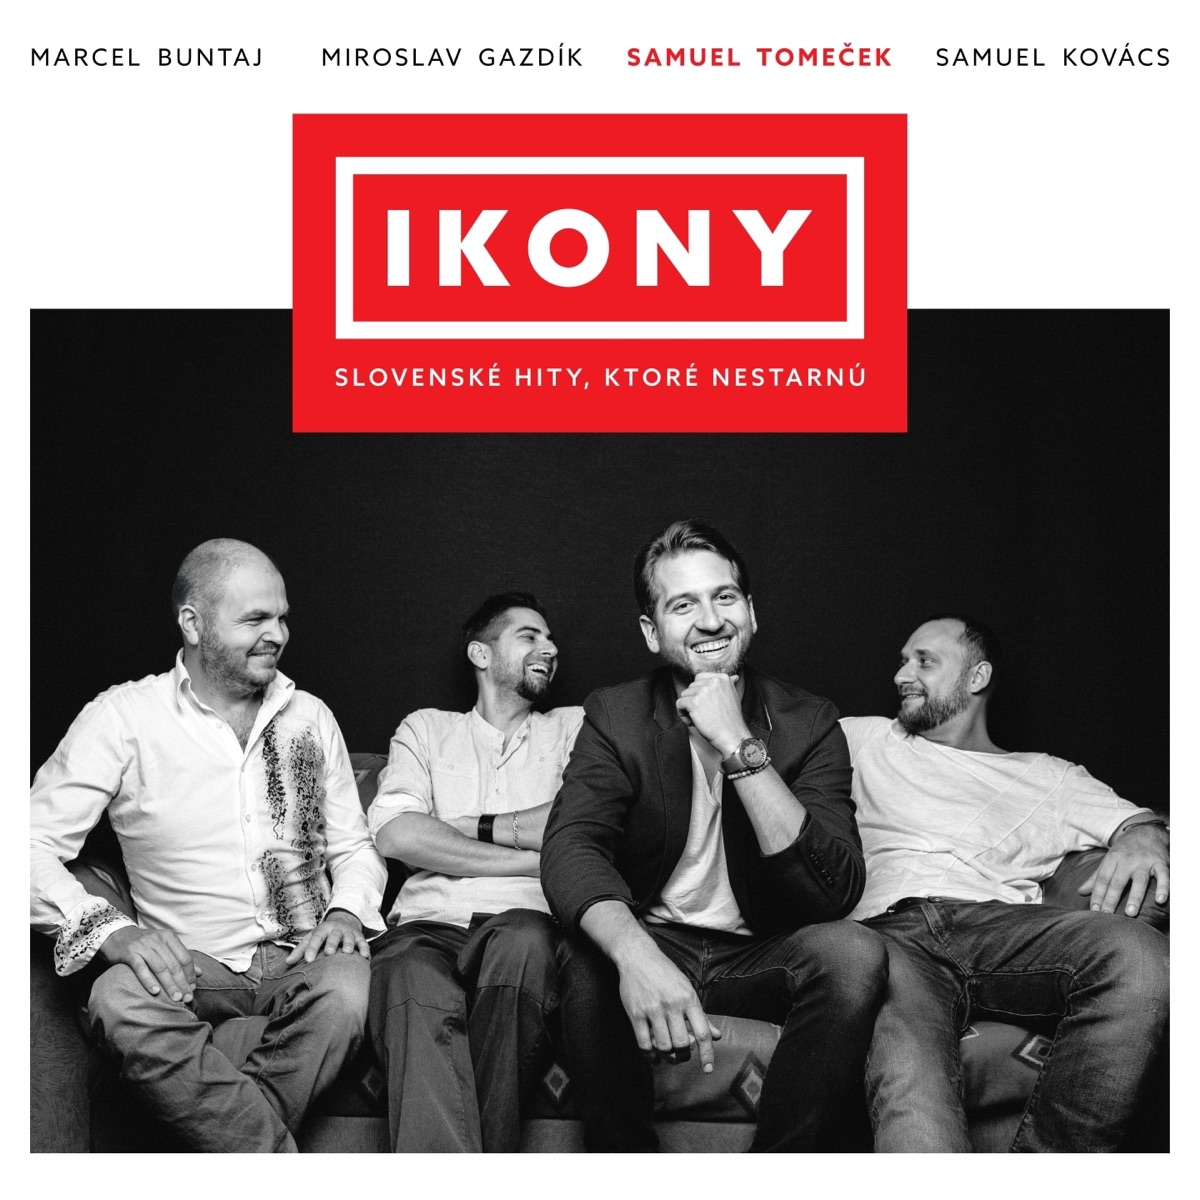 Ikony - Album by Samuel Tomecek - Apple Music